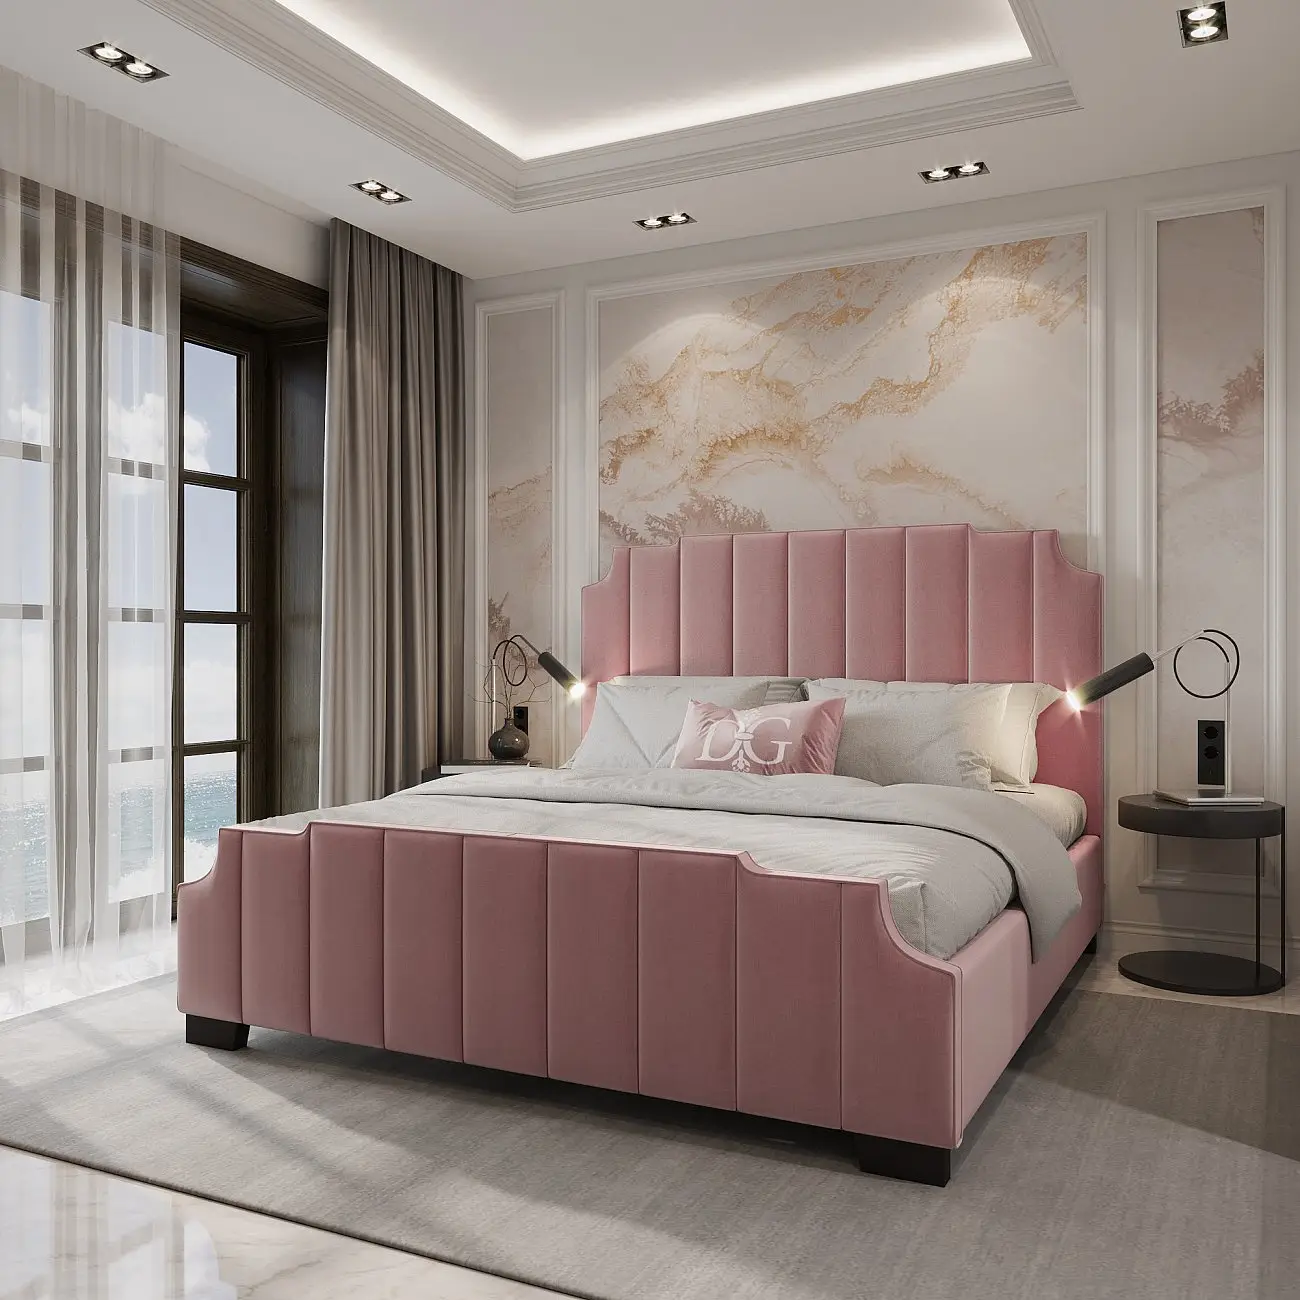 Double bed 160x200 cm bright pink Bony